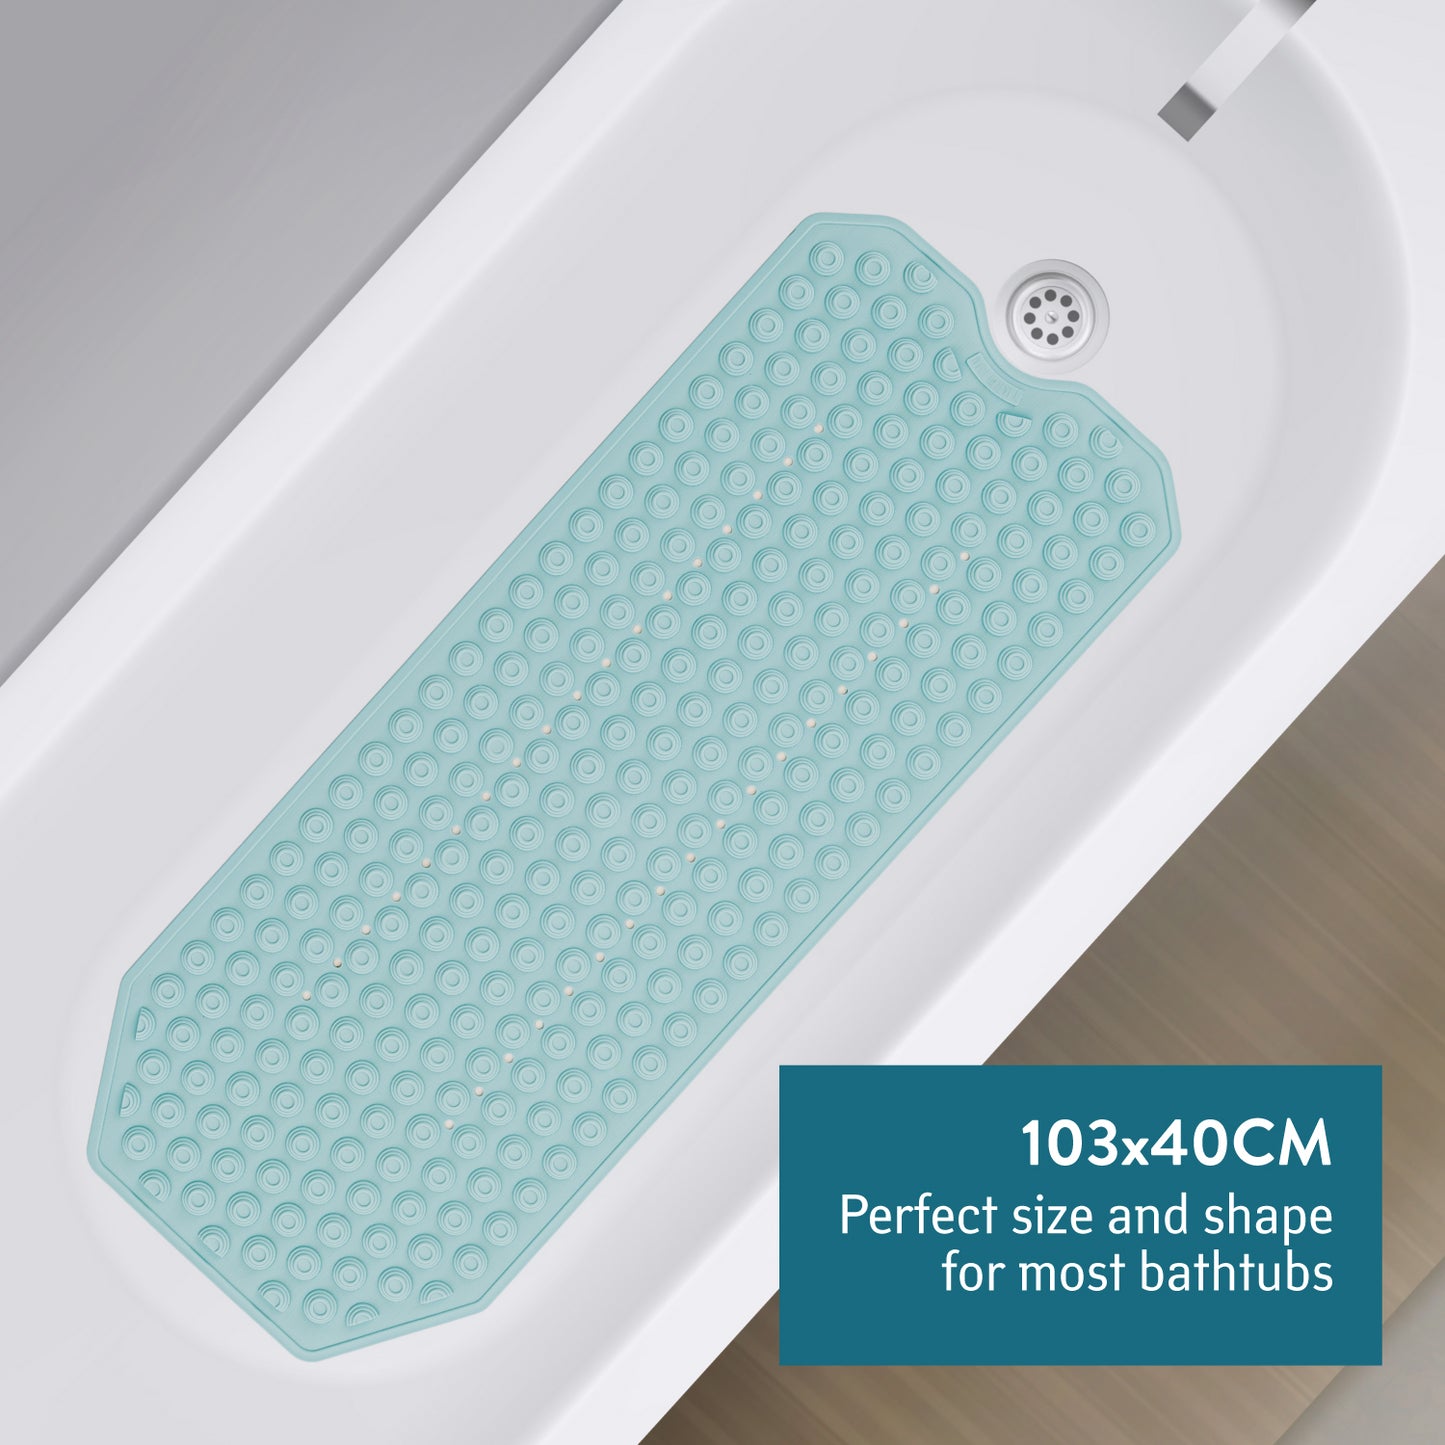 Tatkraft Secure - Non Slip Bath Mat for Inside Shower/Bath, 40 x 103cm, Durable Natural Rubber Bathtub Mat, Blue, Premium Italian Quality